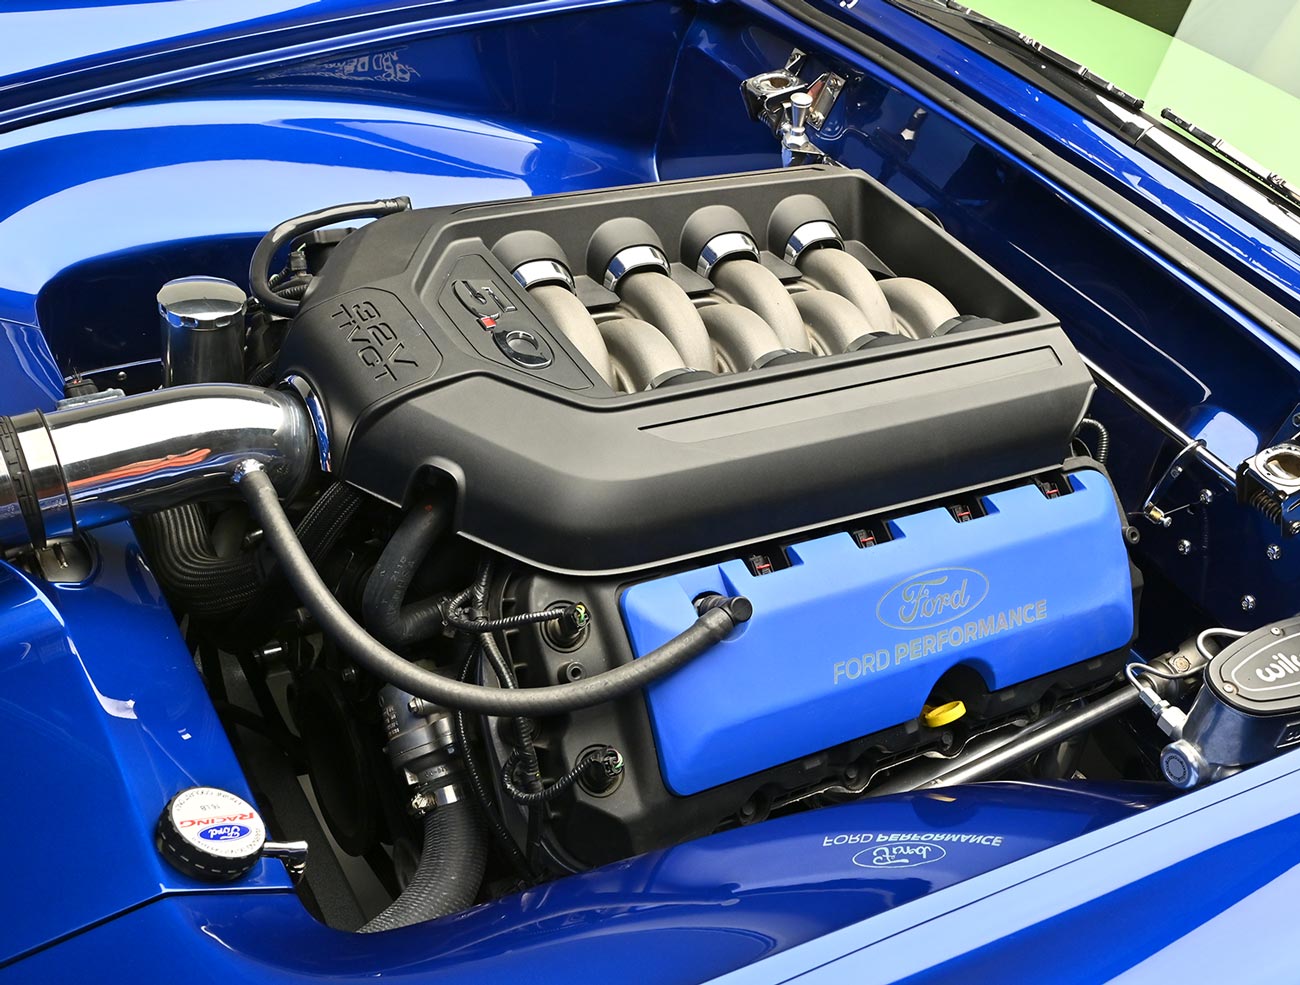 the ’55 Thunderbird convertible engine